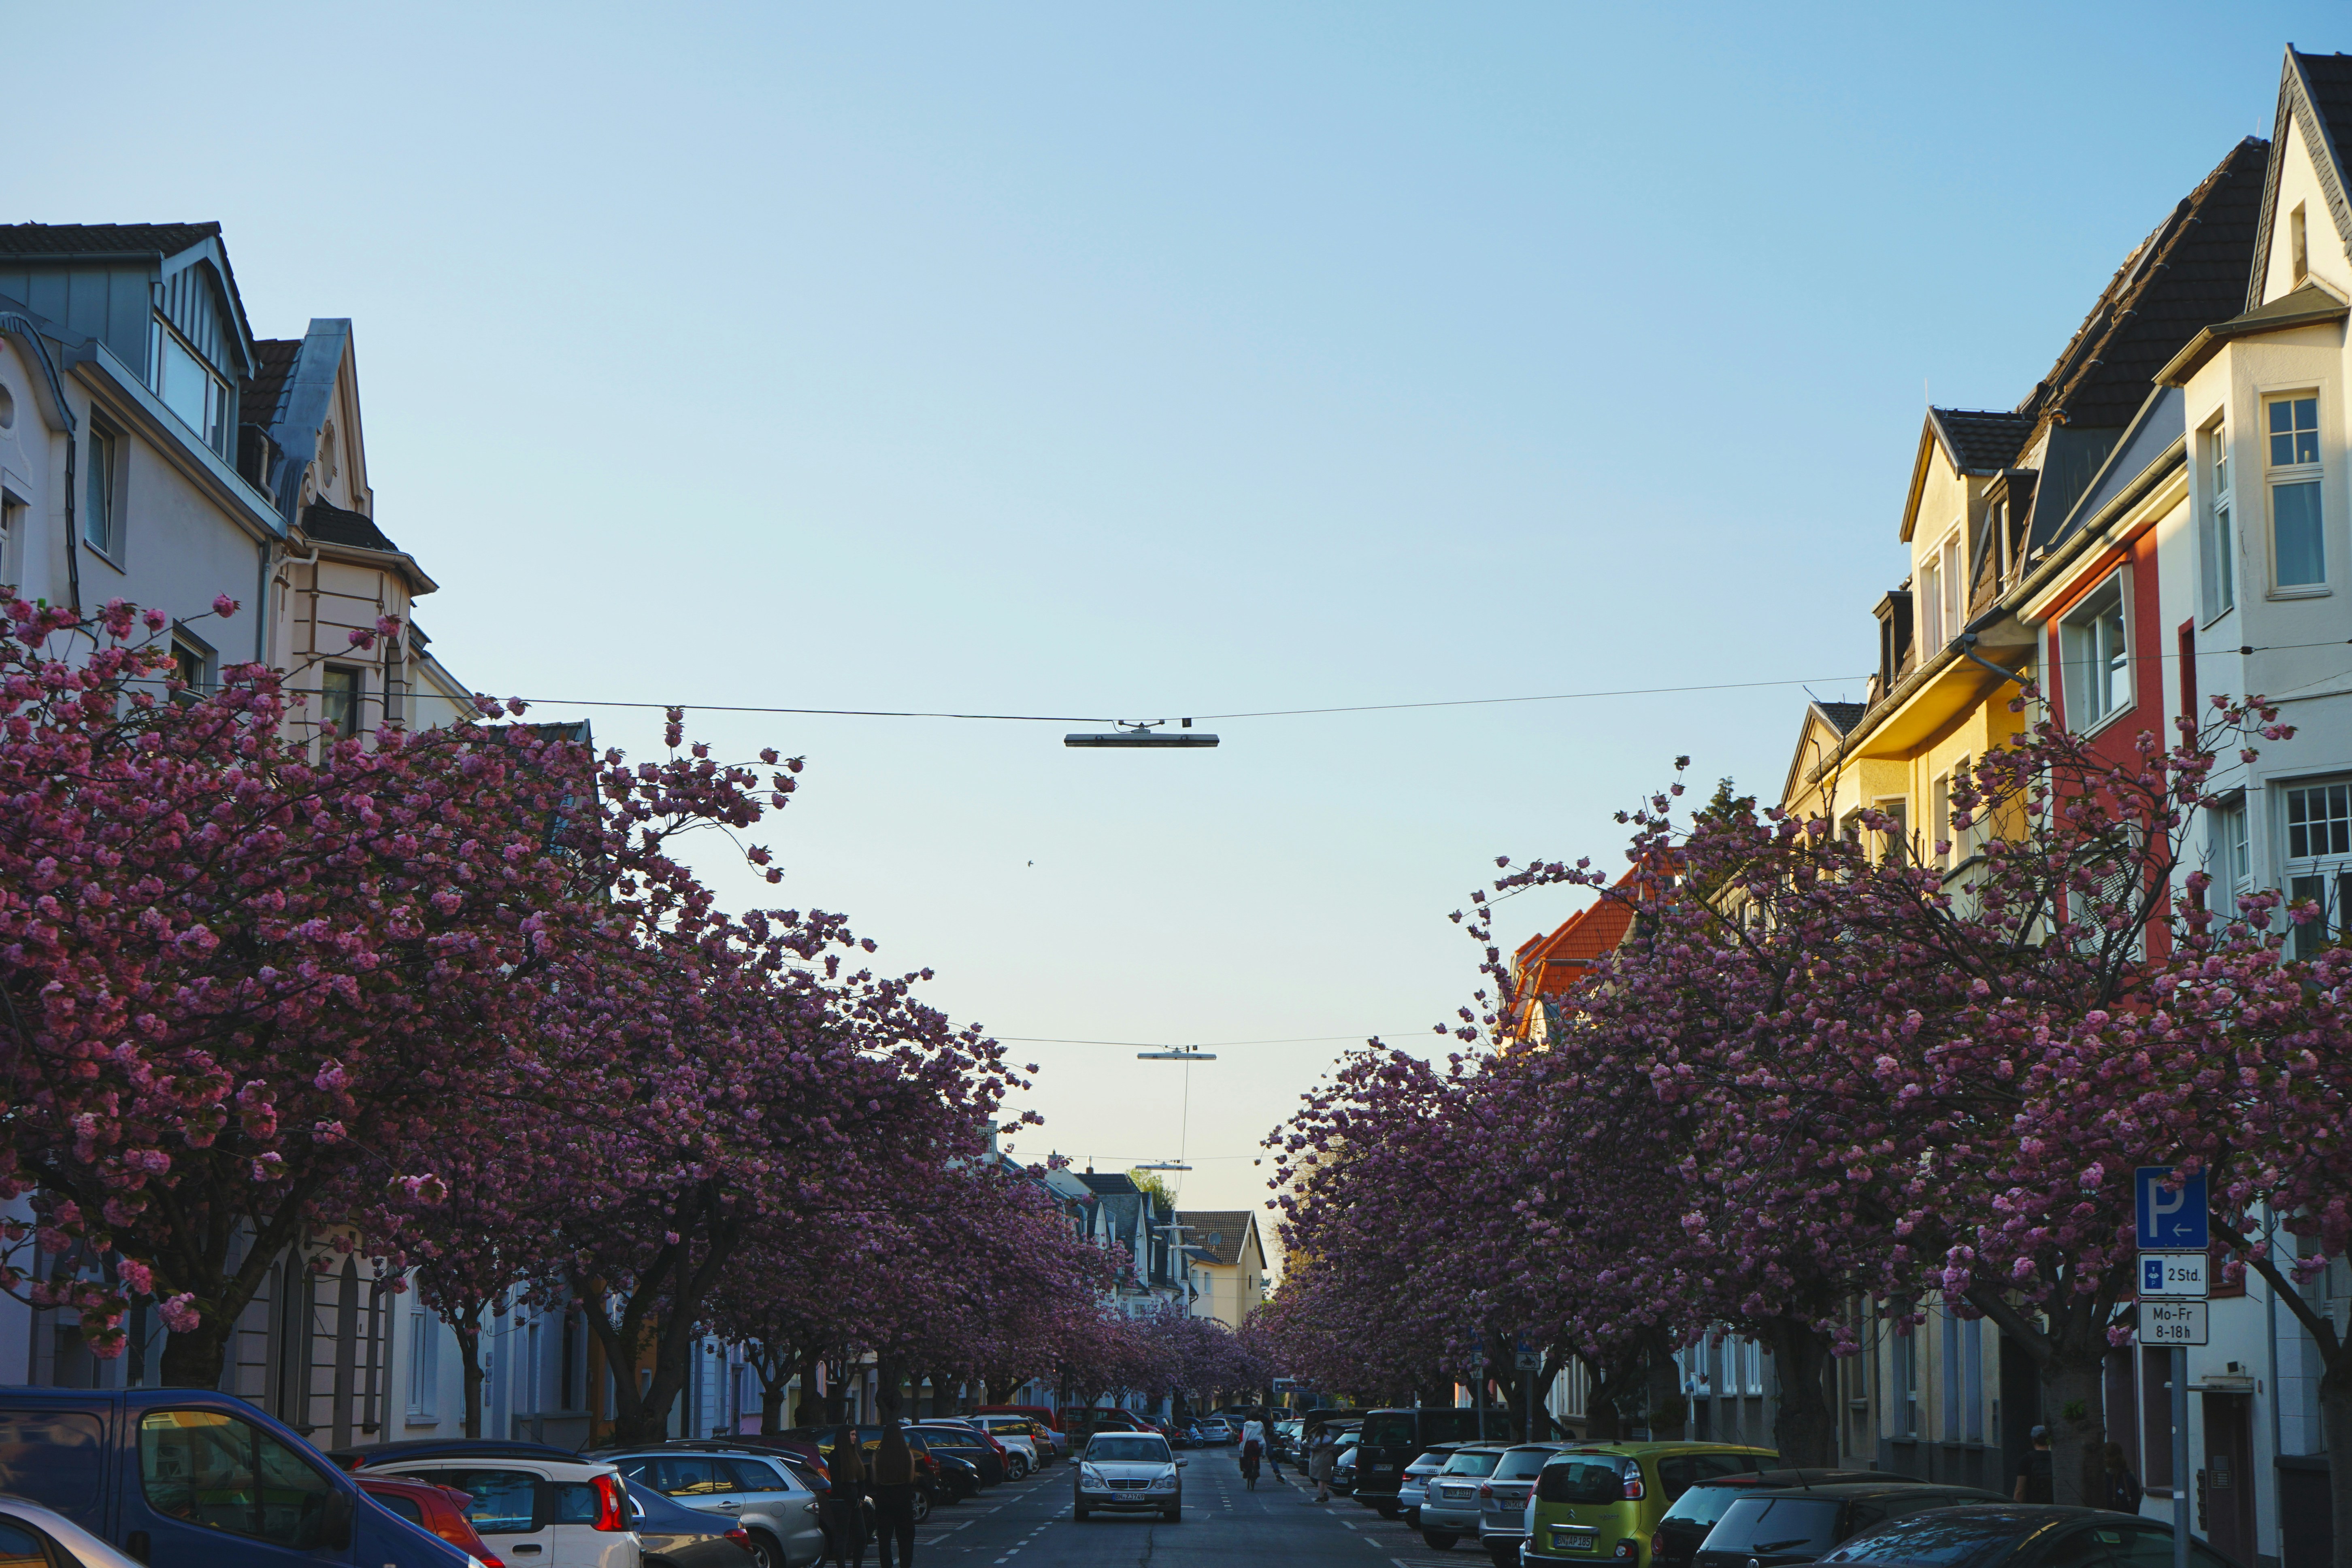 Cherry blossom alley in Bonn.